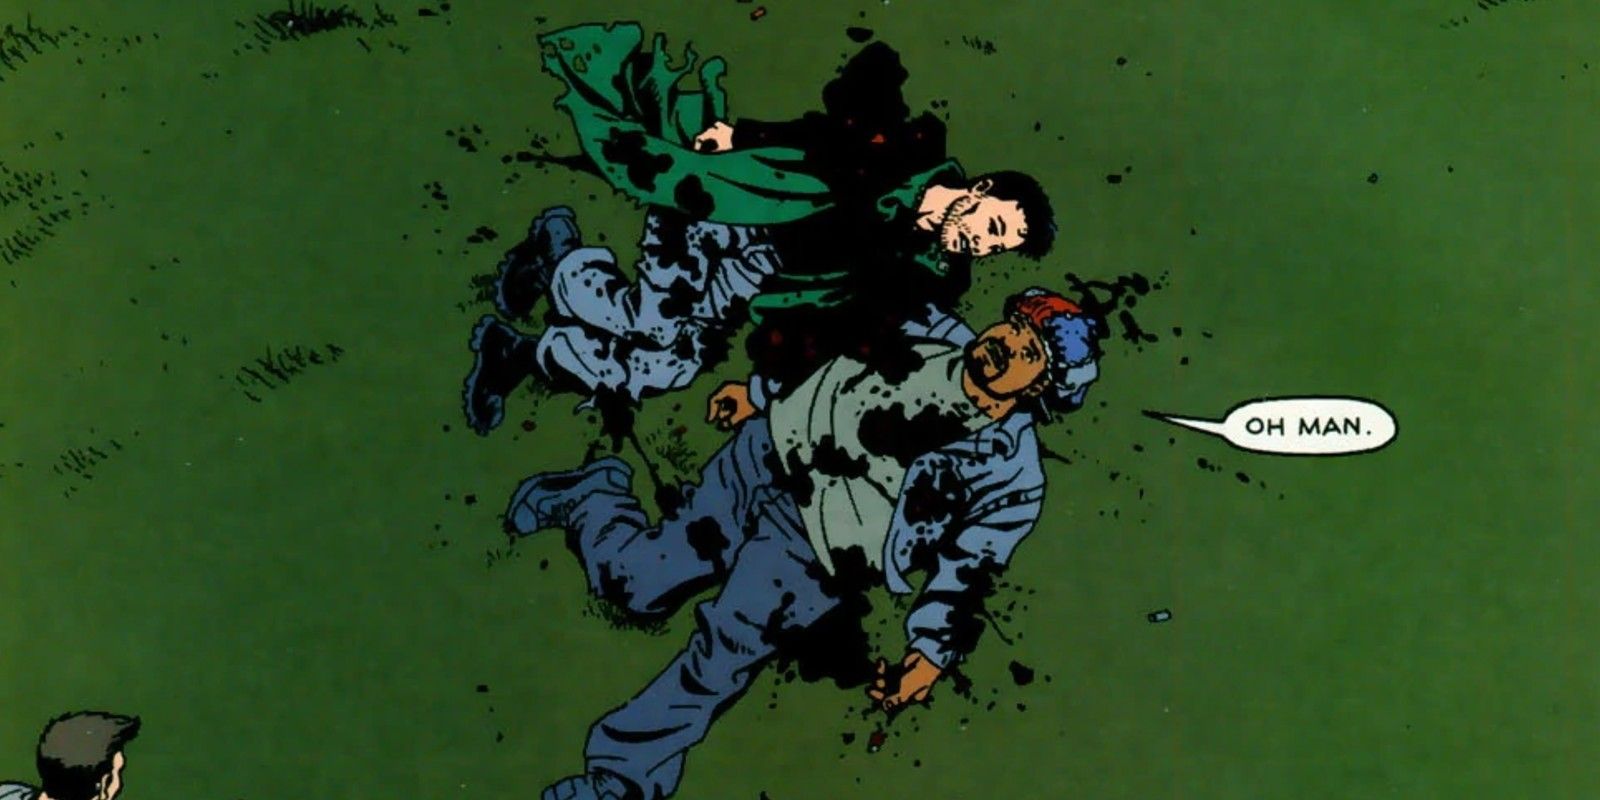 Tommy Monoghan and his Friend Natt die in Hitman from DC Comics